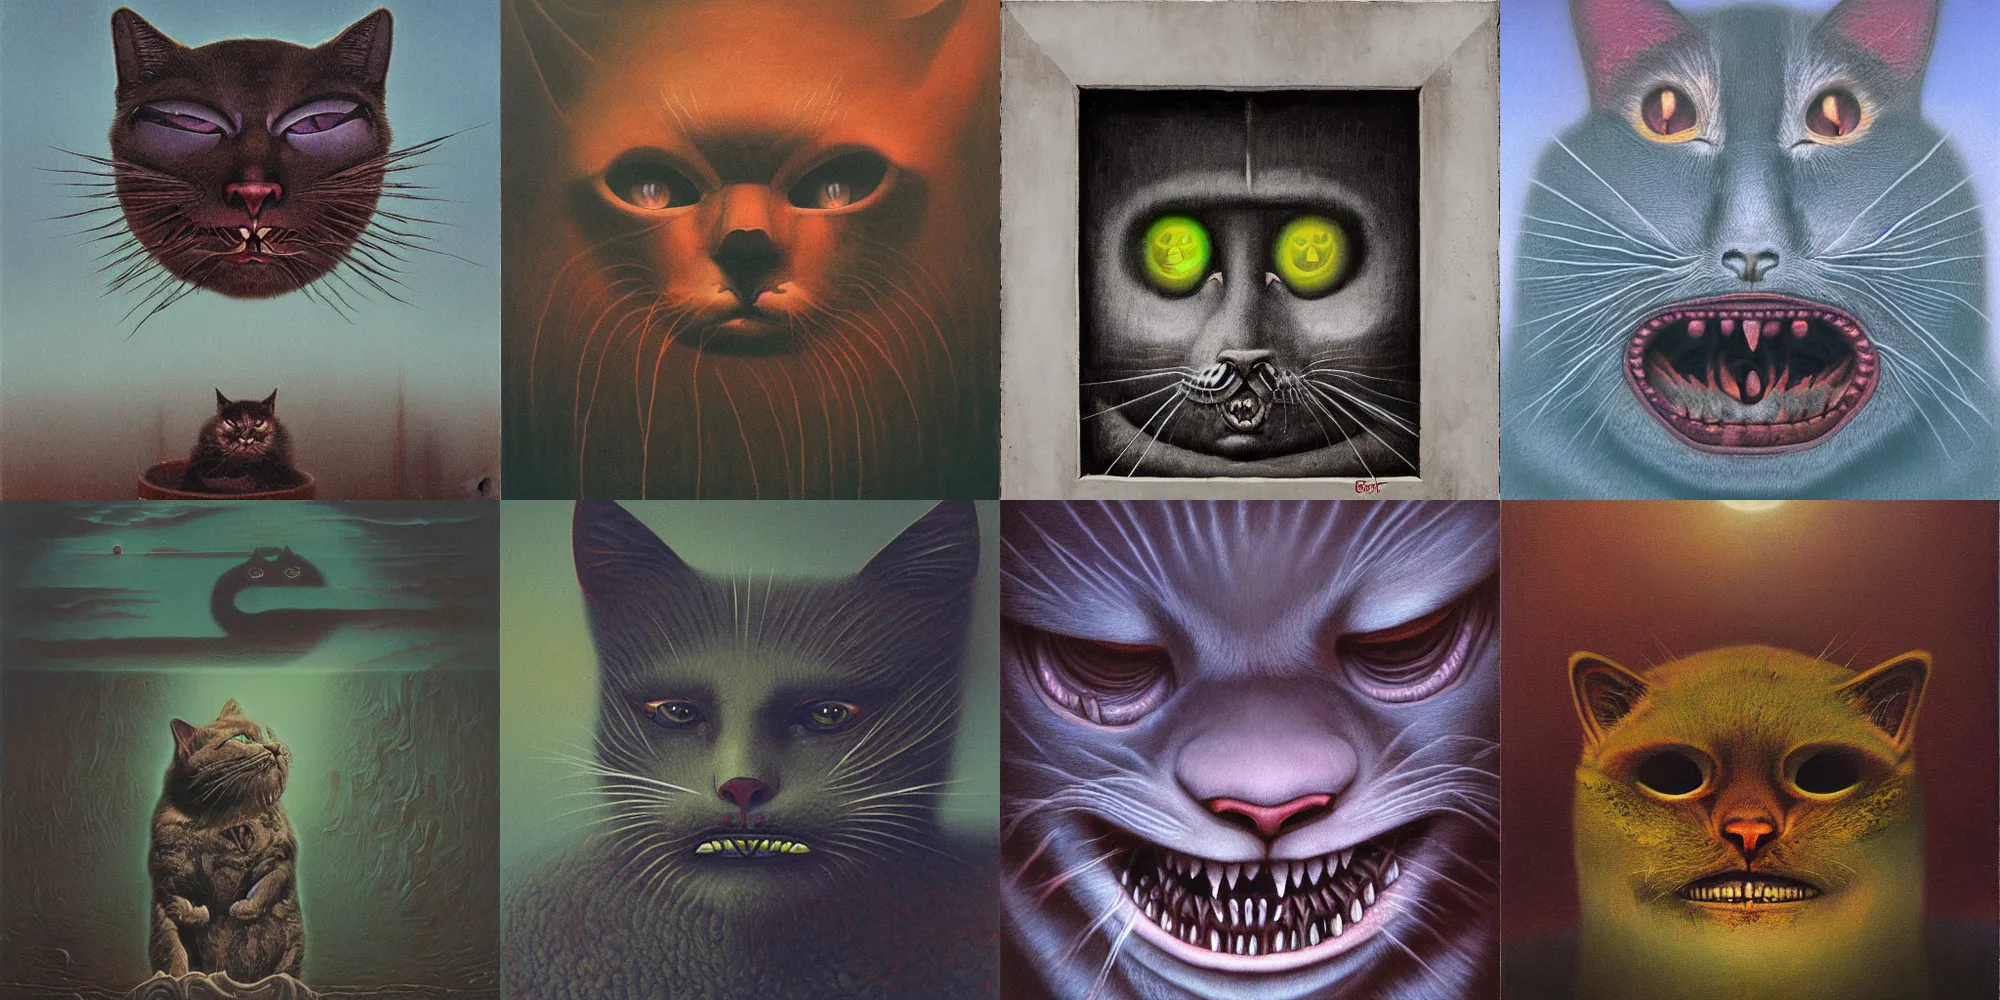 Image similar to grinning evil cat, HD, award winning, in style of beksinski, film grain, medium format, 8k resolution, oil on canvas